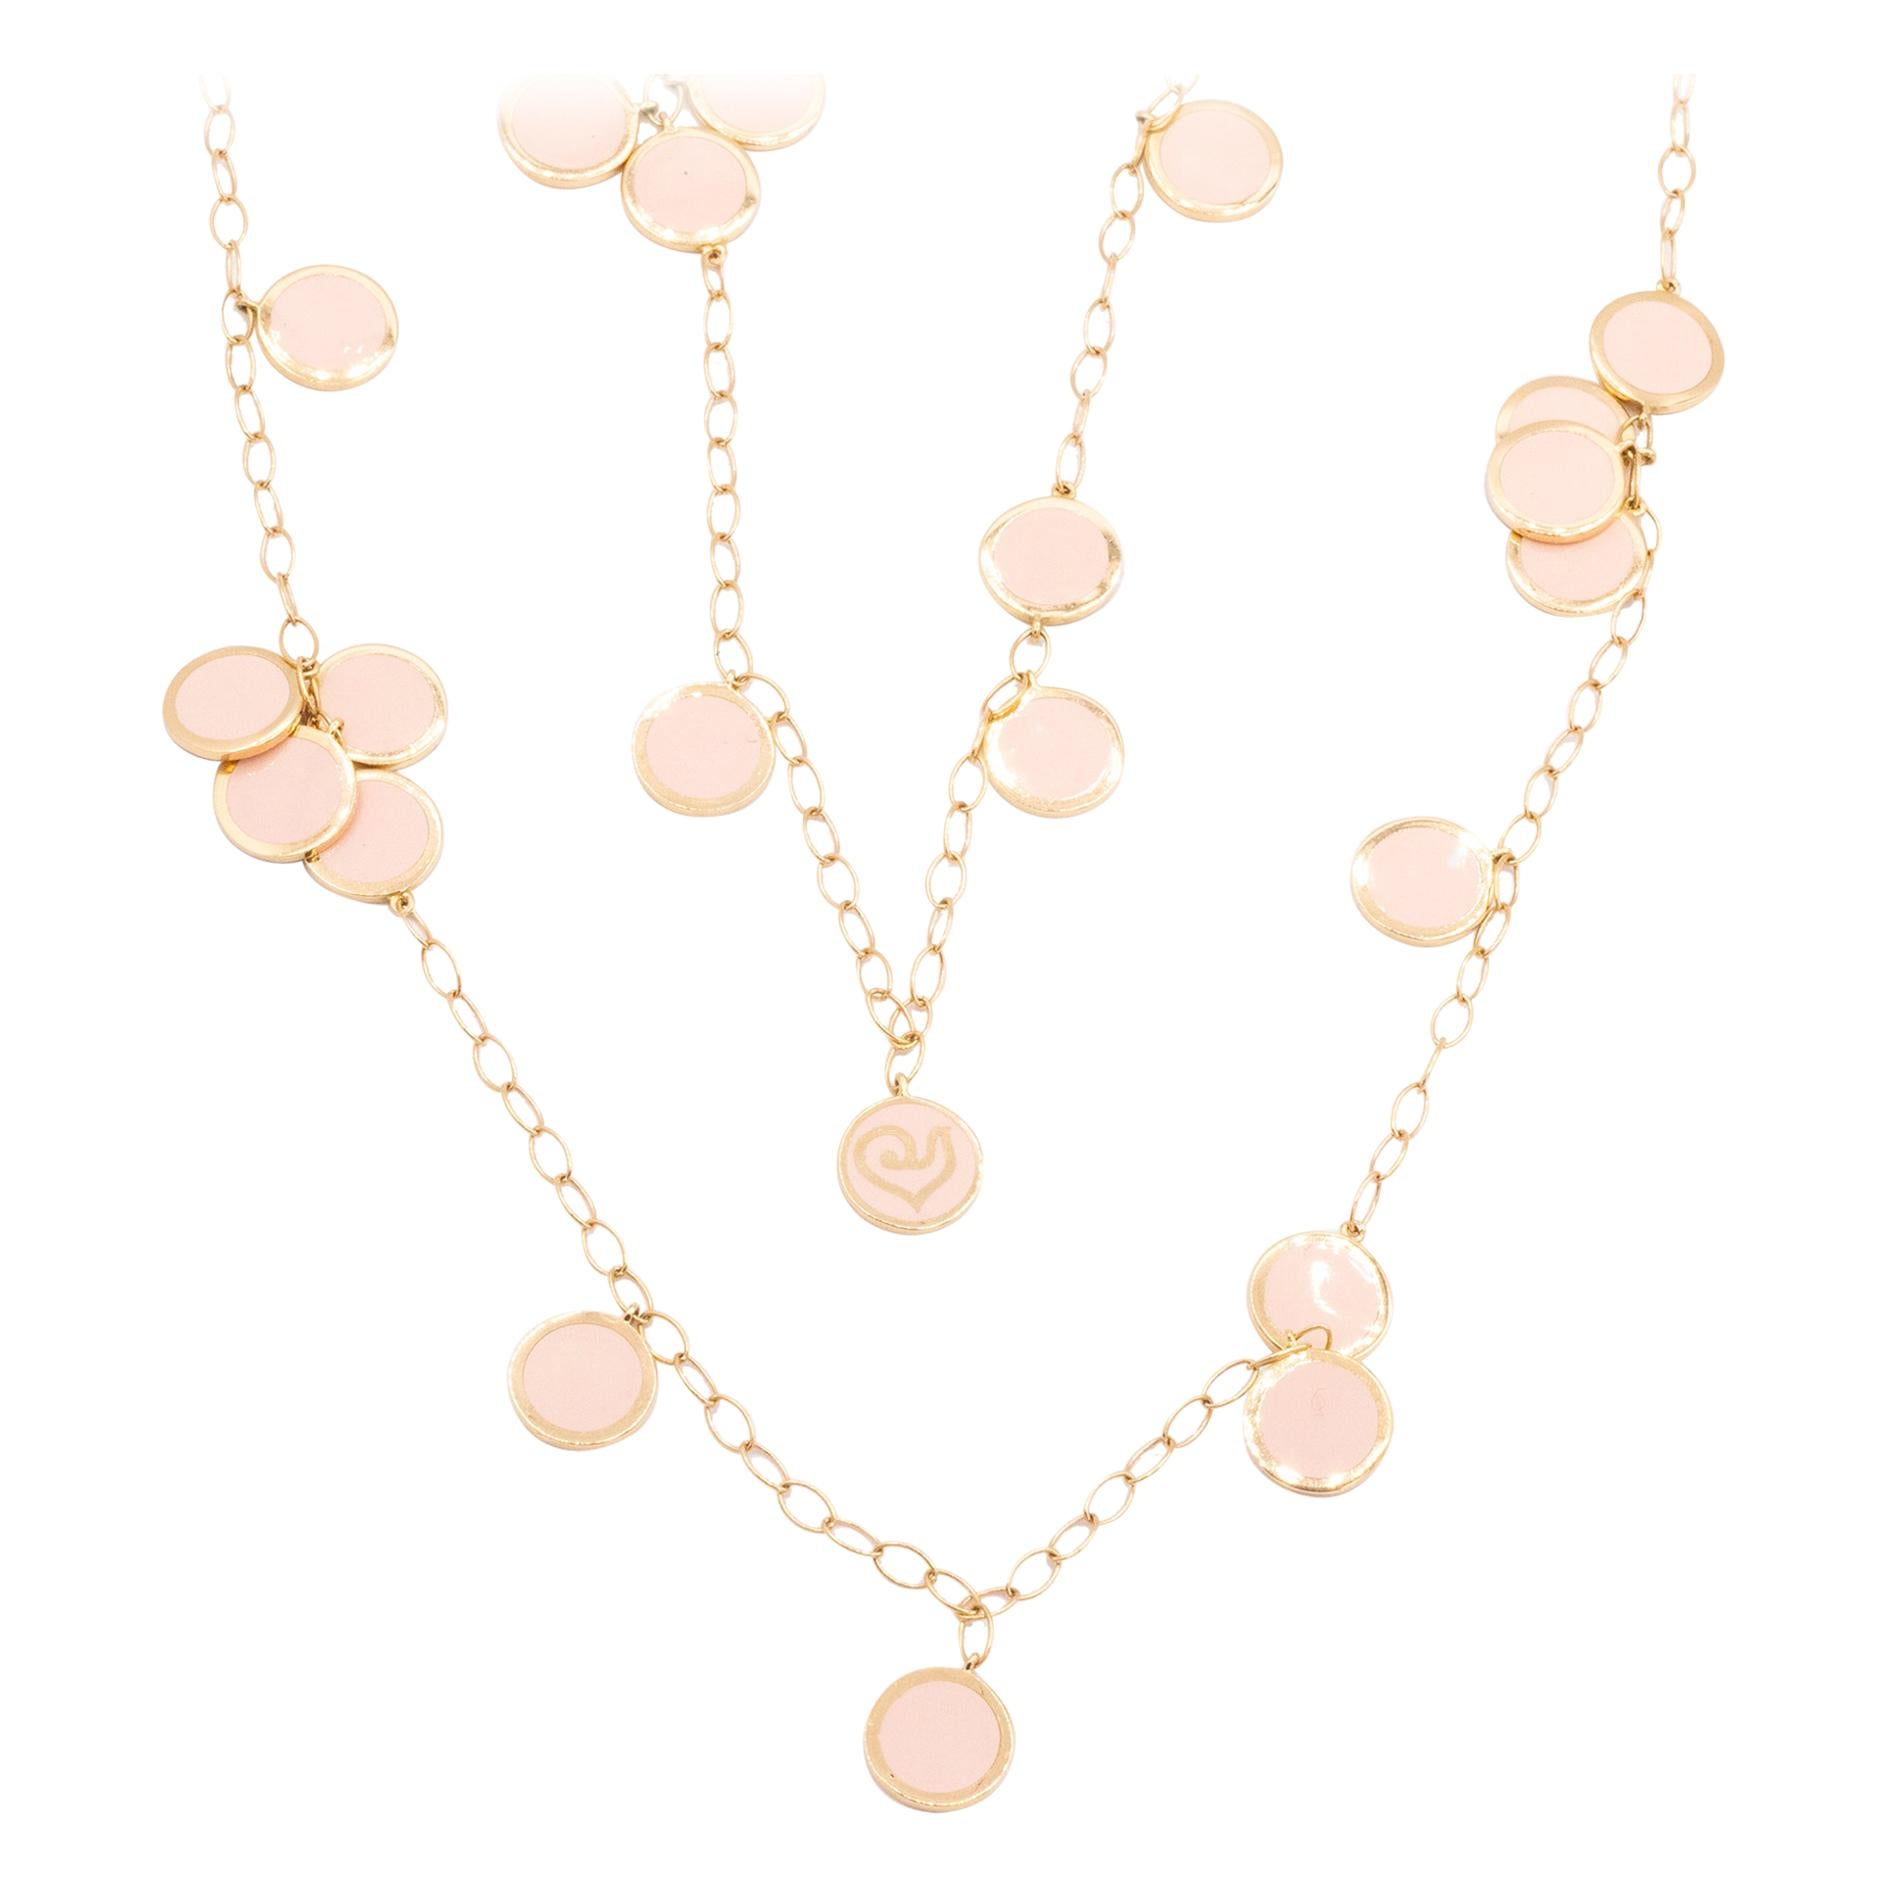 Chantecler Paillettes Pink Enamel Necklace, Exclusively